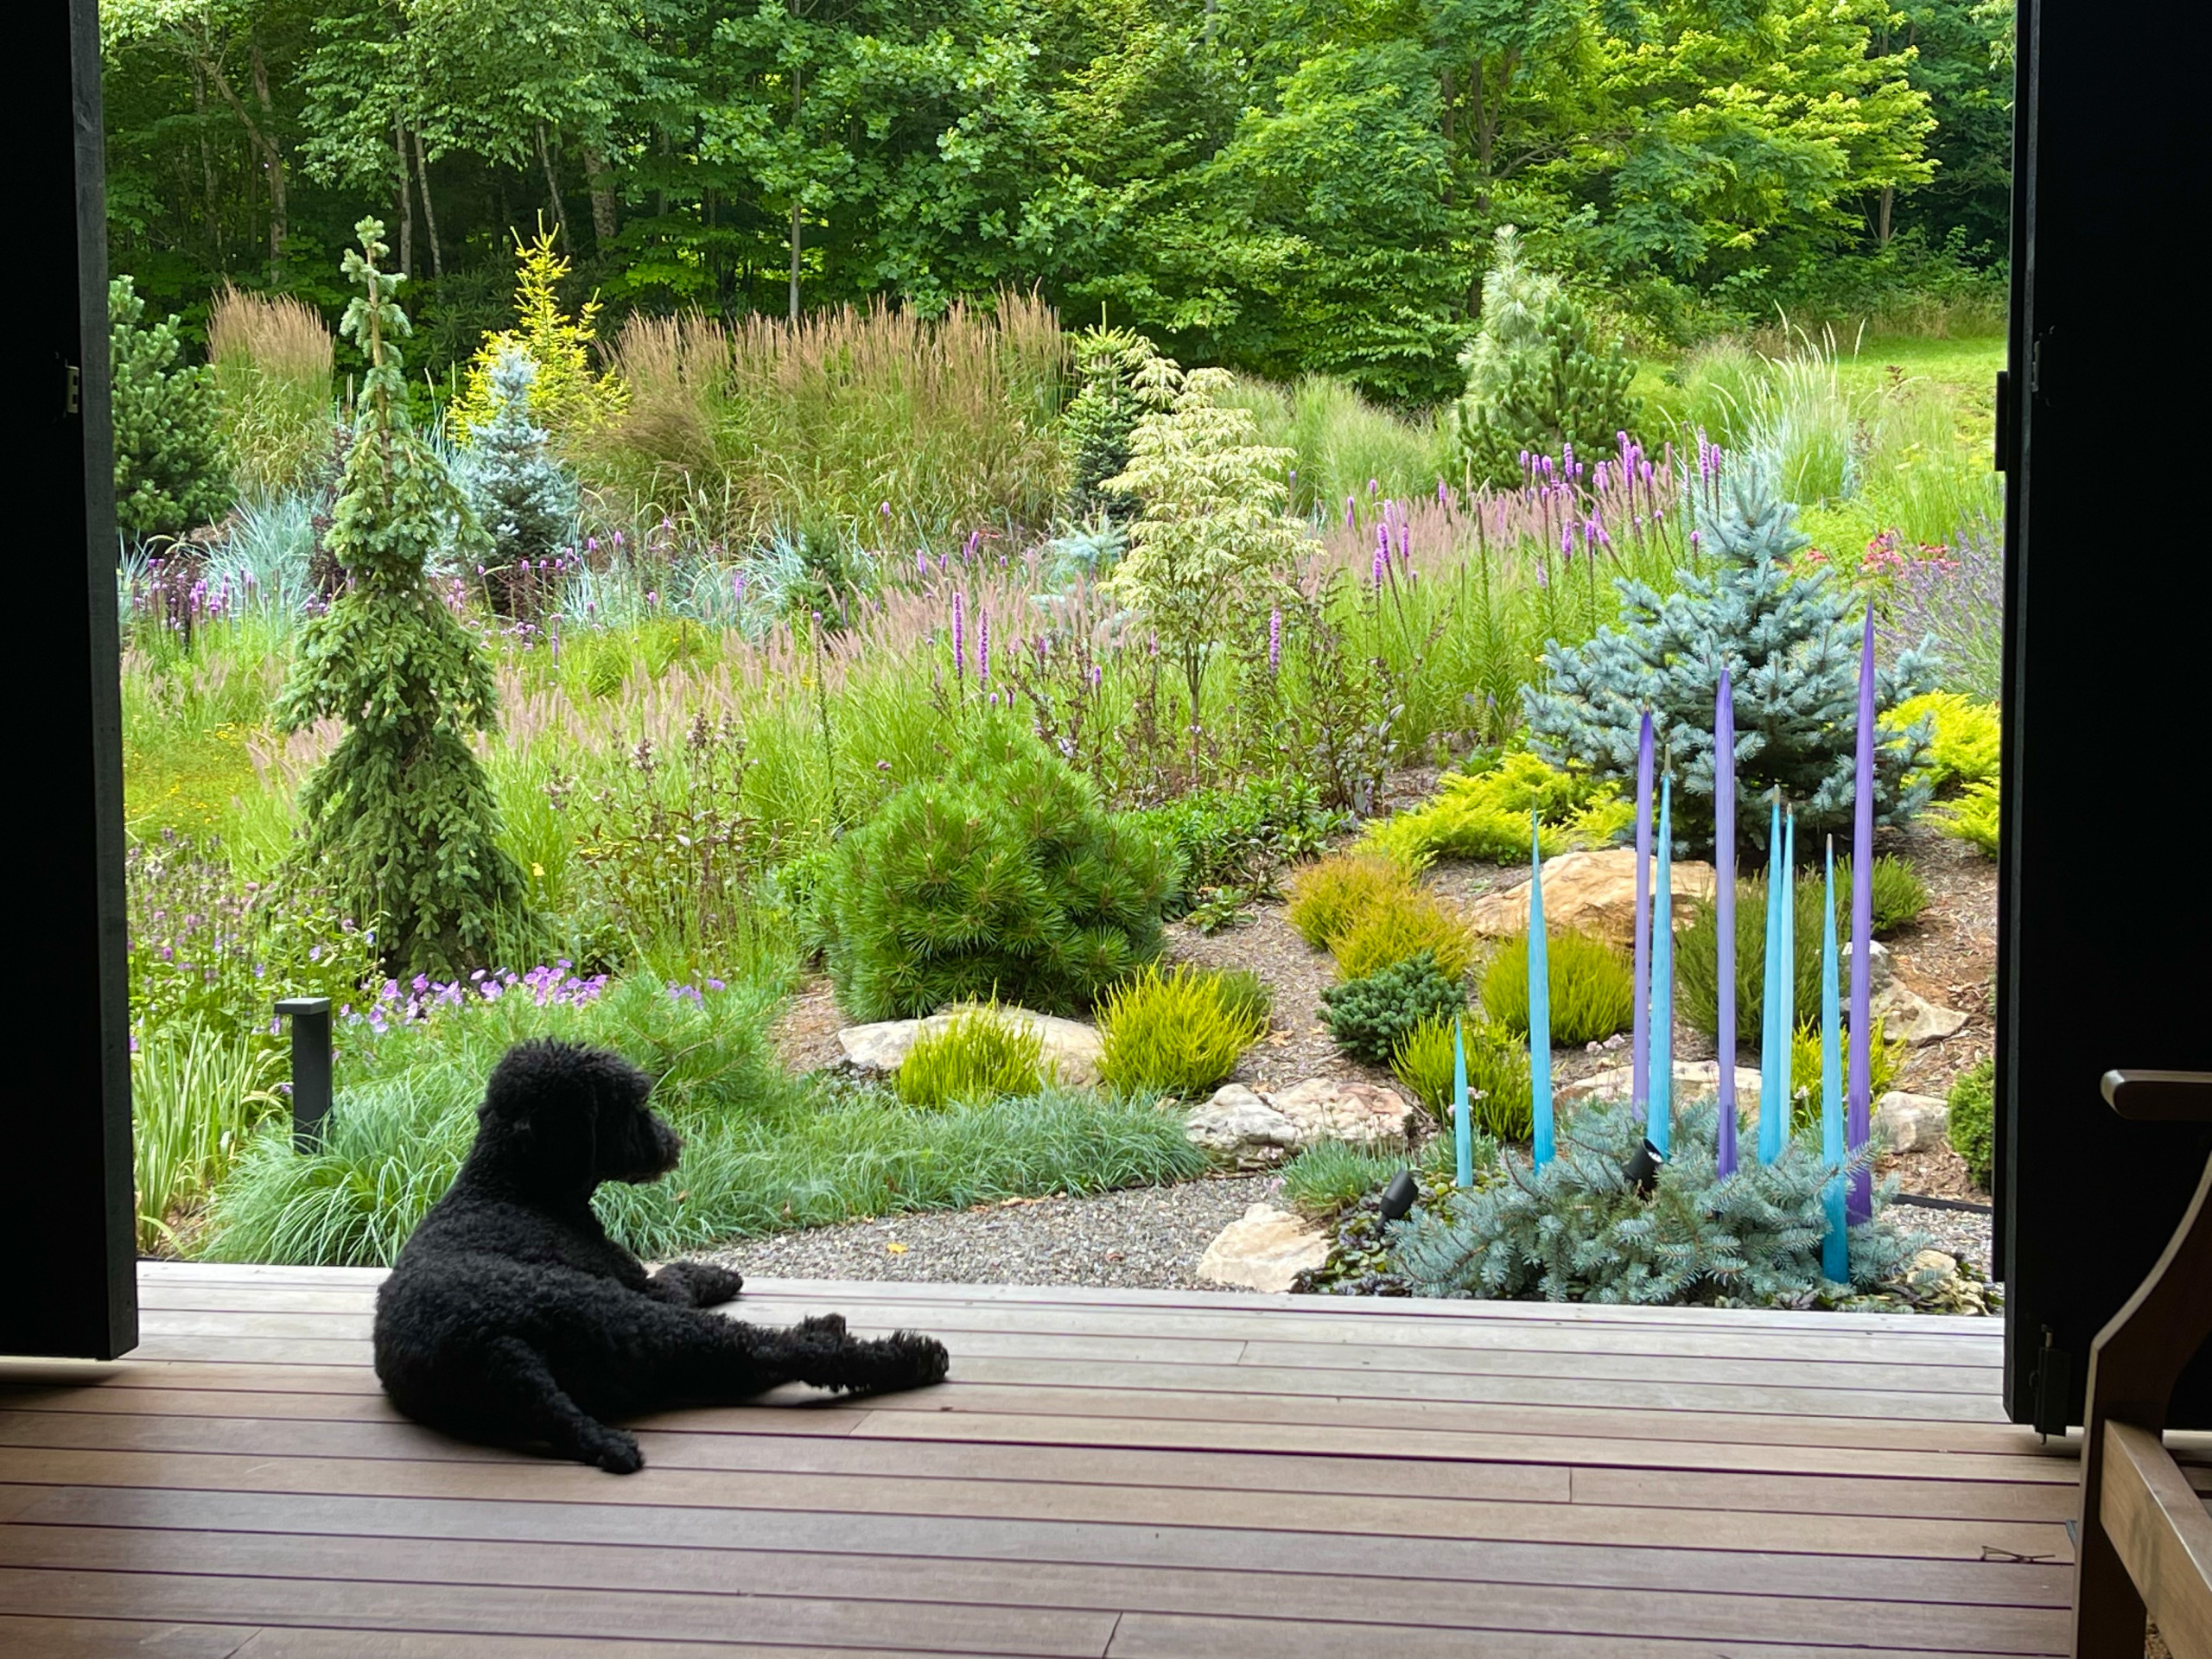 Dog and dogtrot:  Amador surveys the garden.